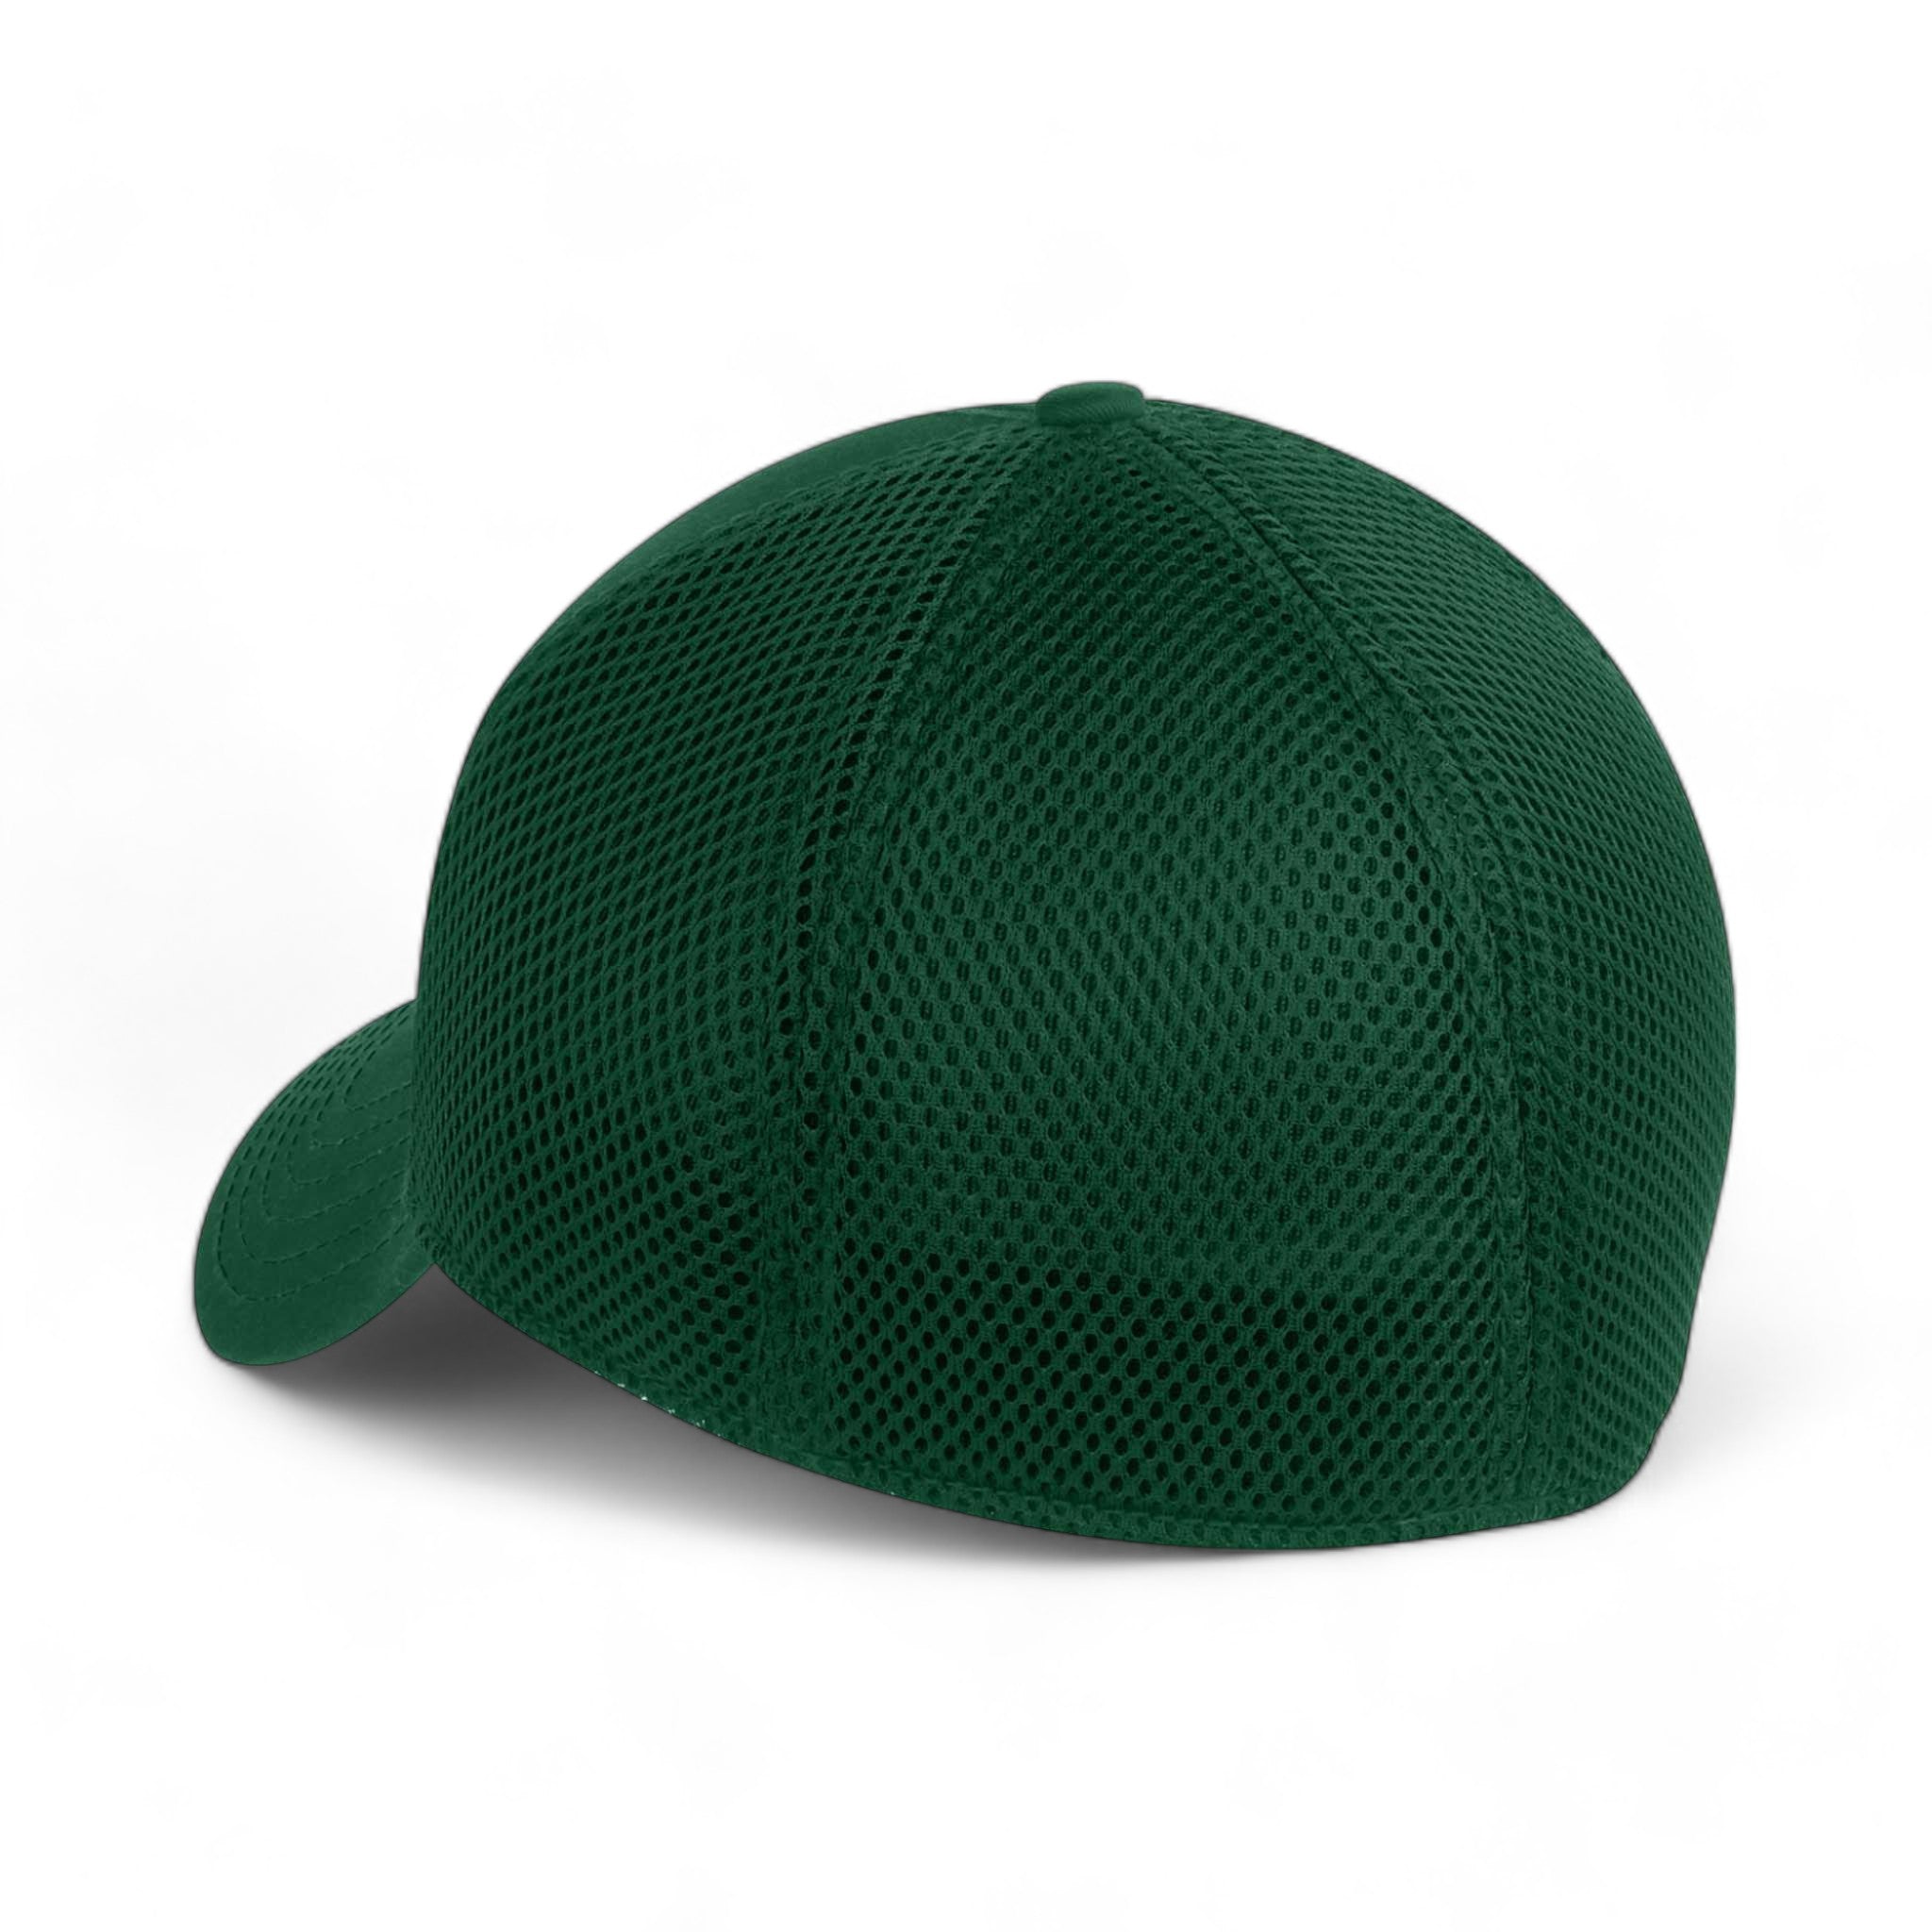 Back view of New Era NE1020 custom hat in dark green